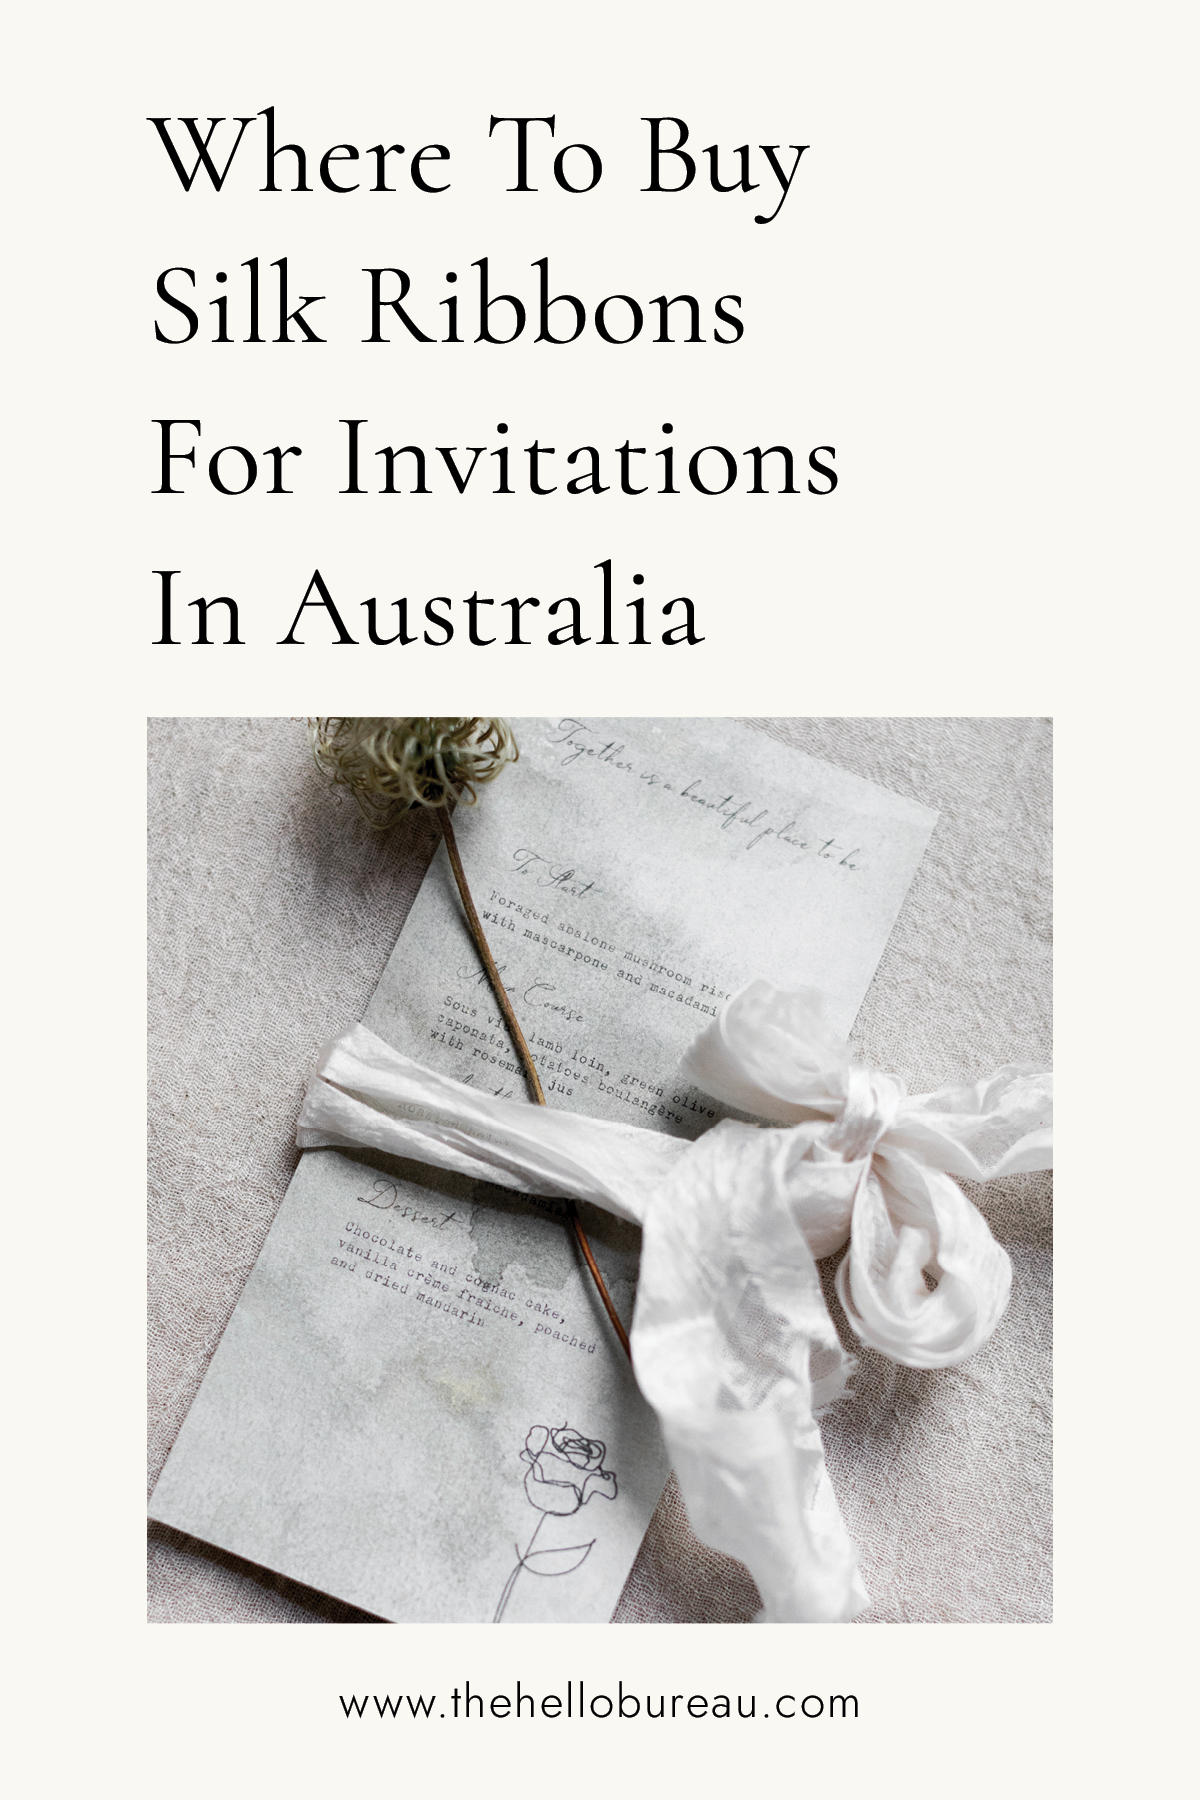 Where To Buy Silk Ribbons For Invitations In Australia